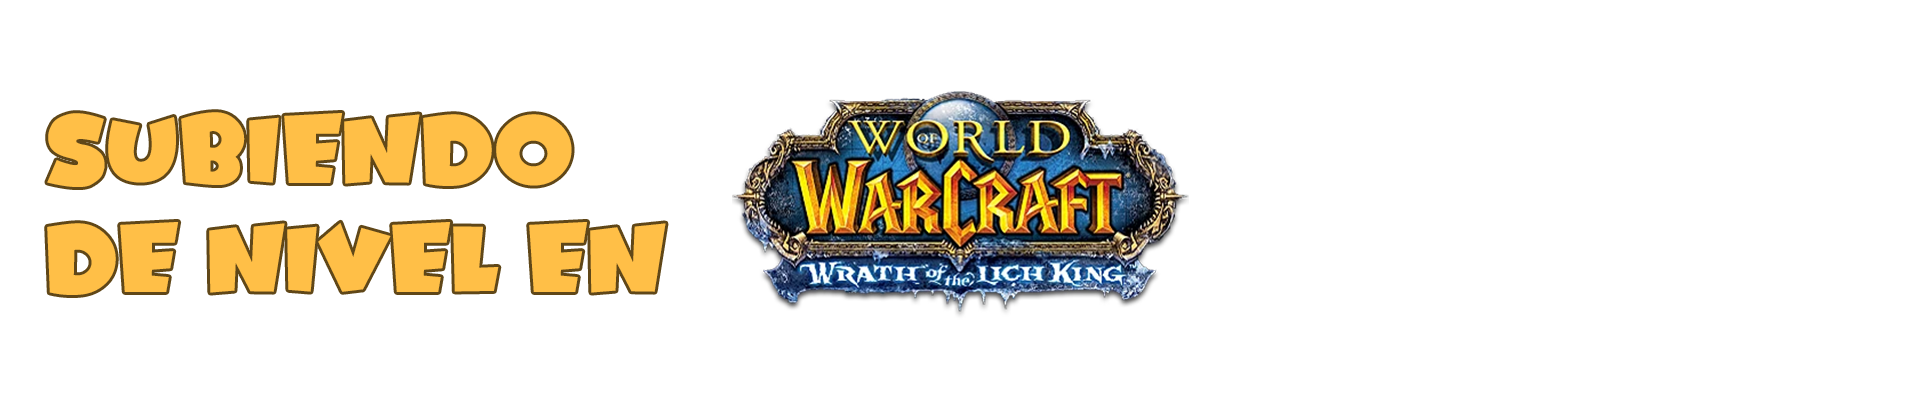 Subiendo de Nivel en World of Warcraft Wrath of the Lich King